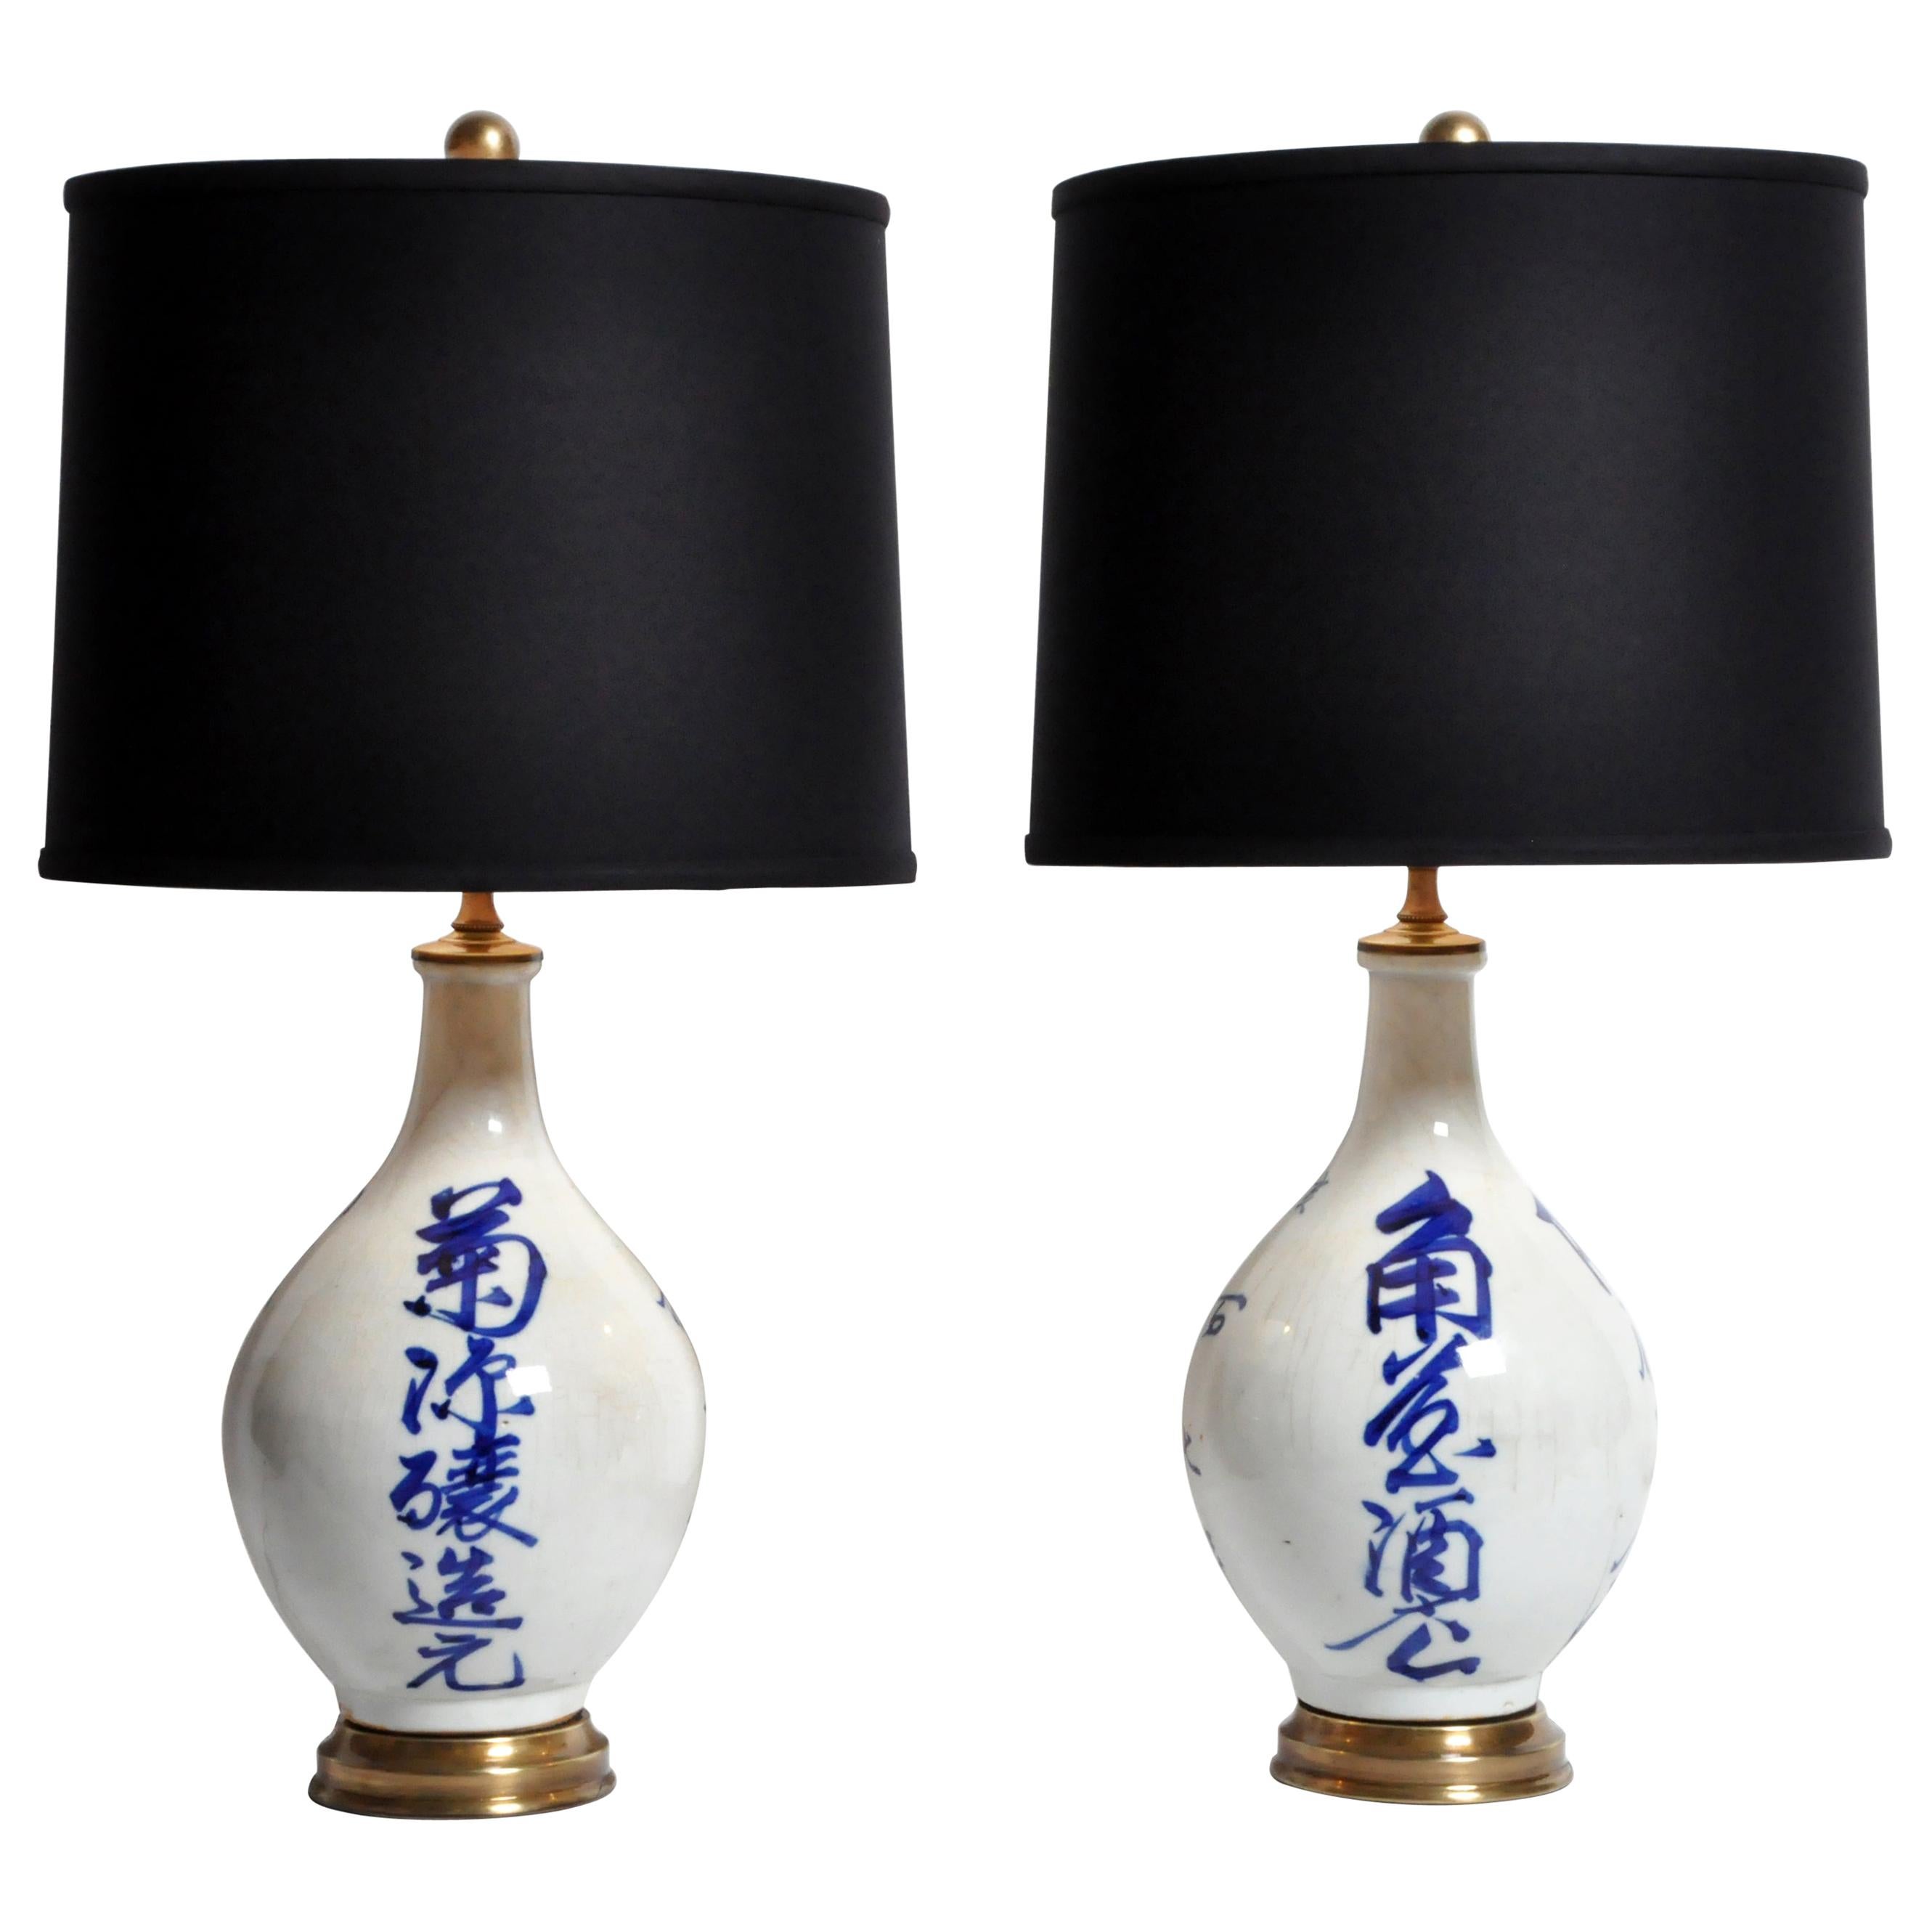 Japanese Sake Bottles Converted to Lamps